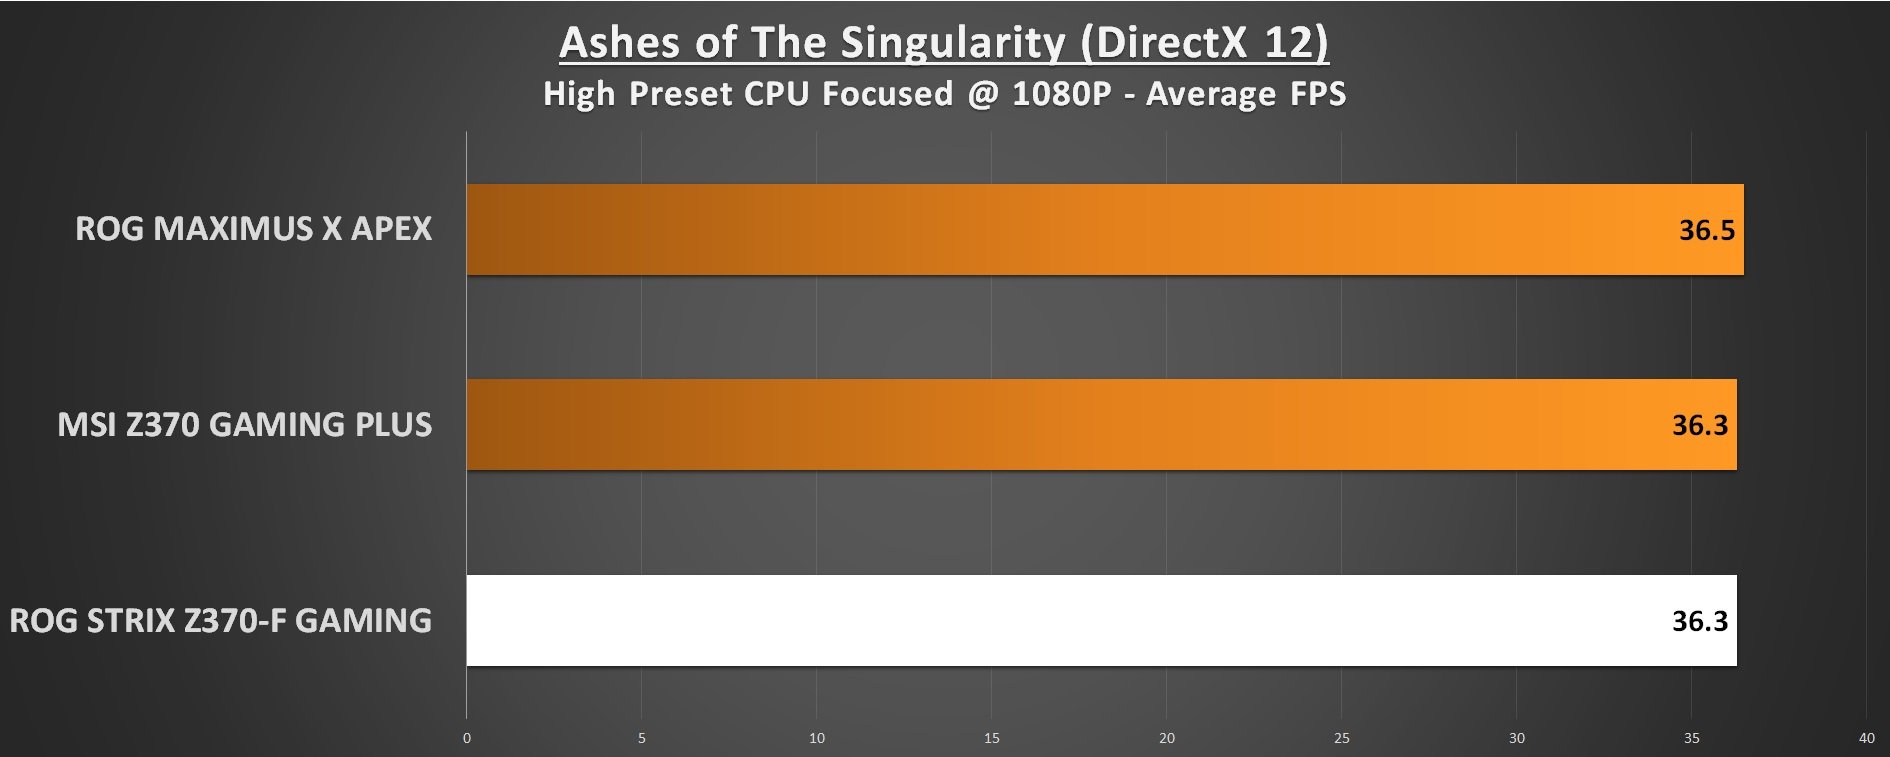 ROG STRIX Z370-F Gaming Ashes of the Singularity DX12